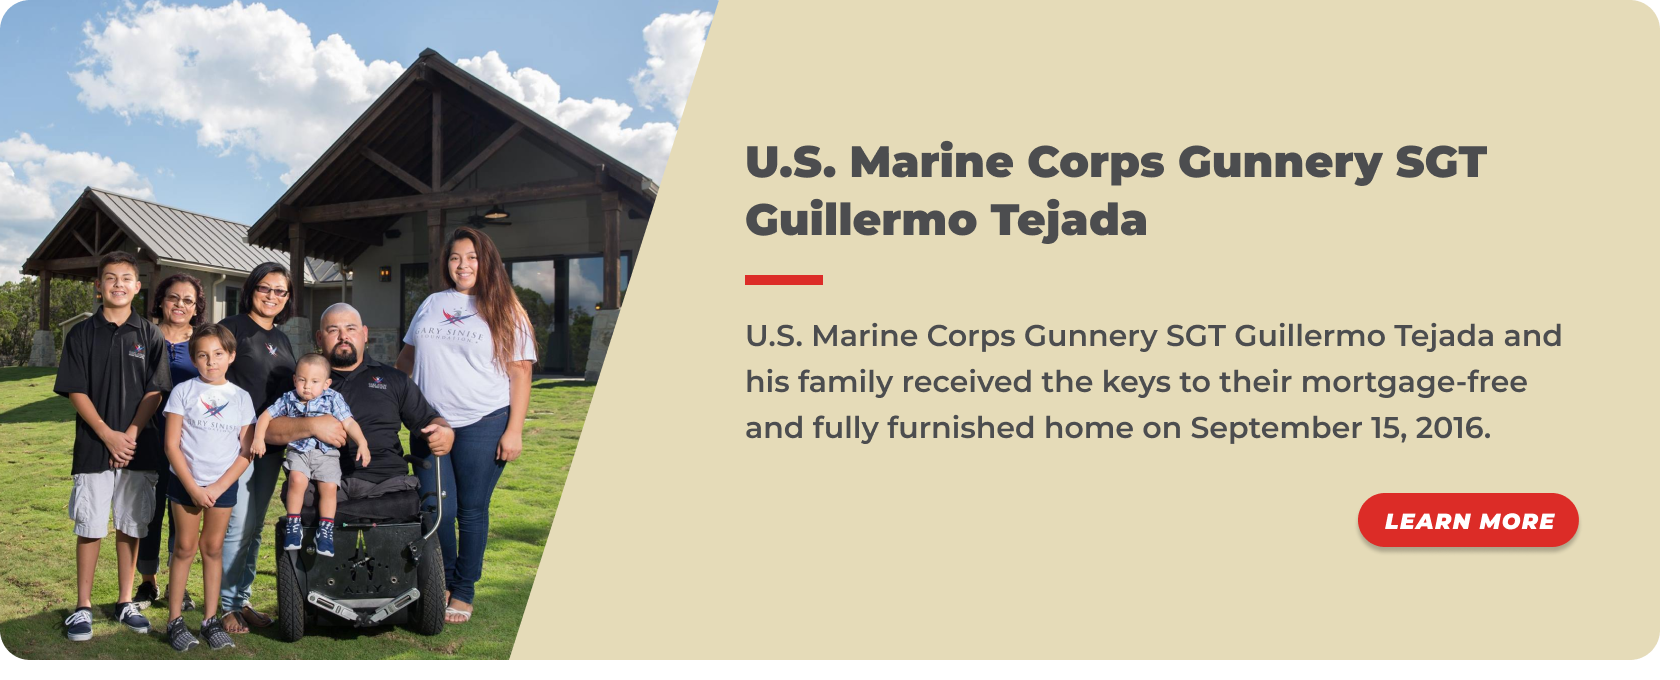 12 -U.S. Marine Corps Gunnery SGT Guillermo Tejada